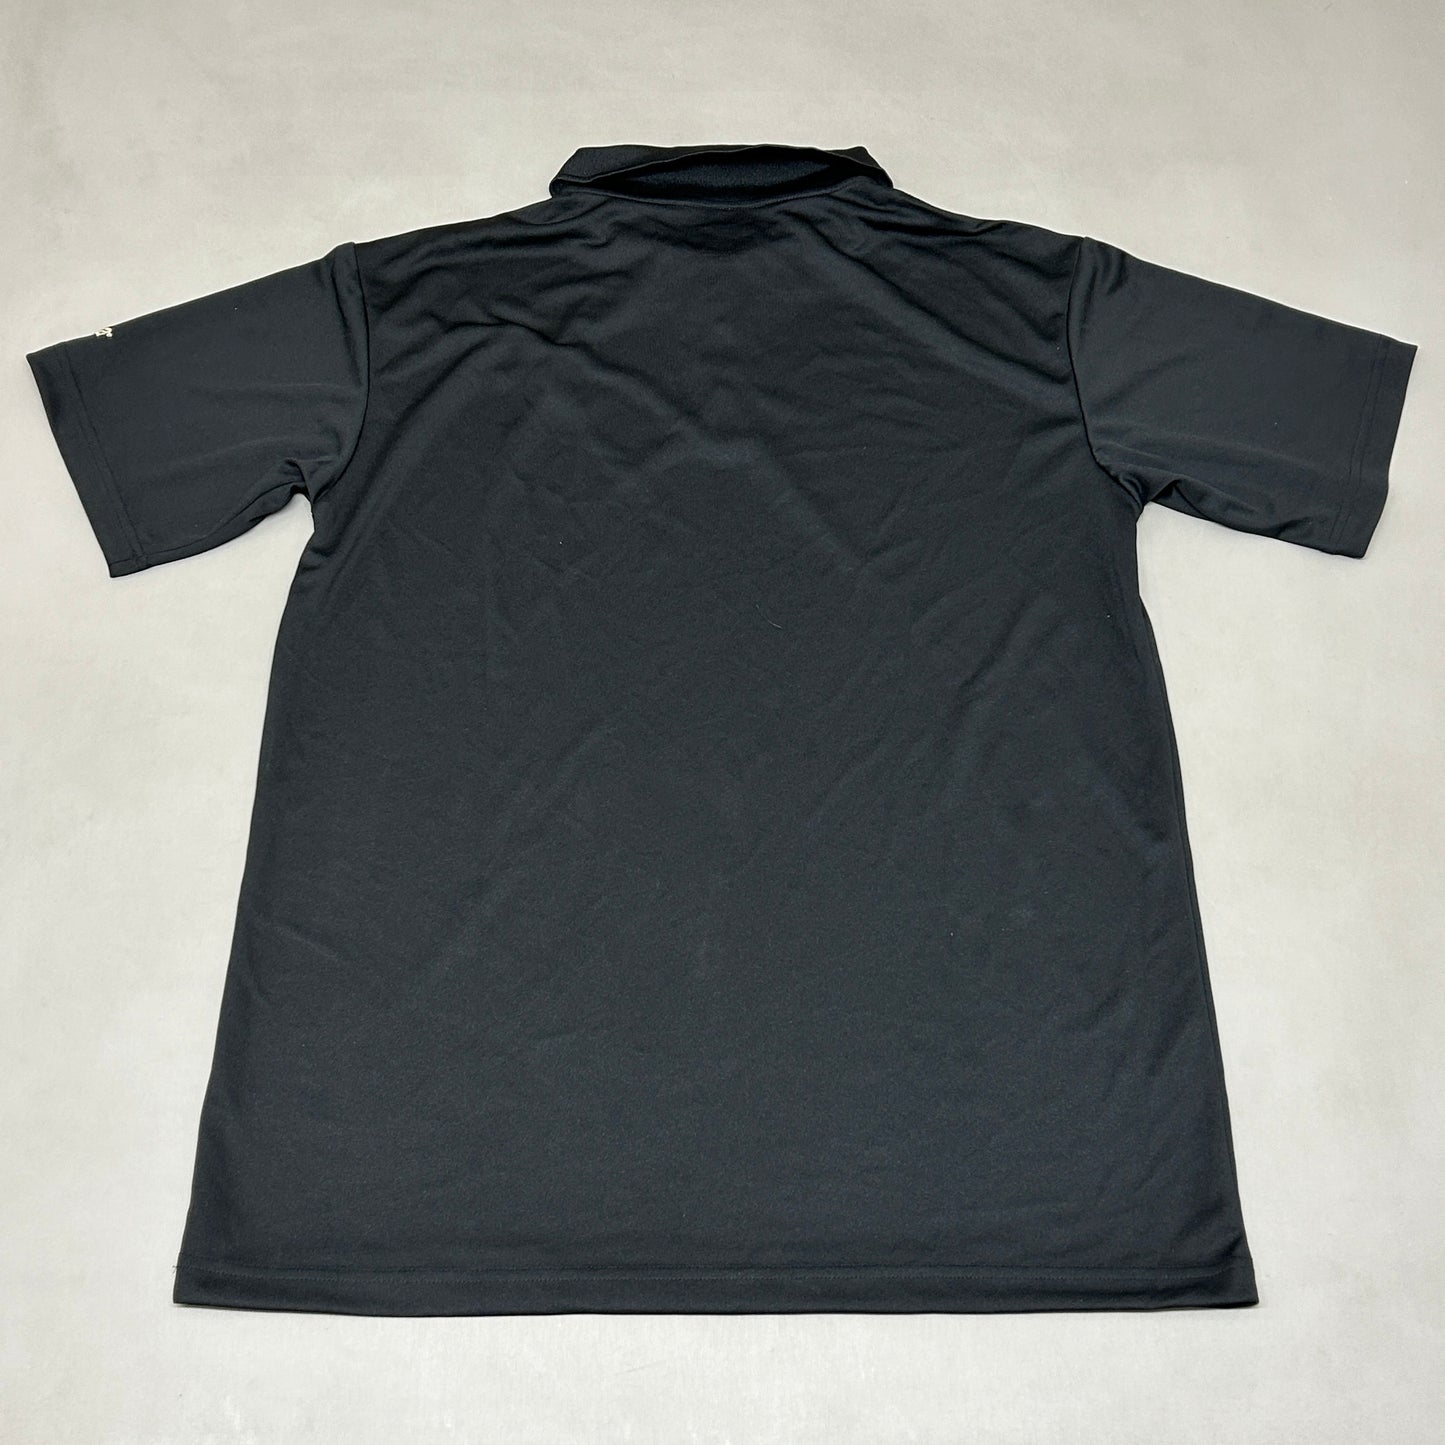 GOOSE PRIDE Official Wawa Employee Short Sleeve Polo T-Shirt Sz L Black 75431 (New)